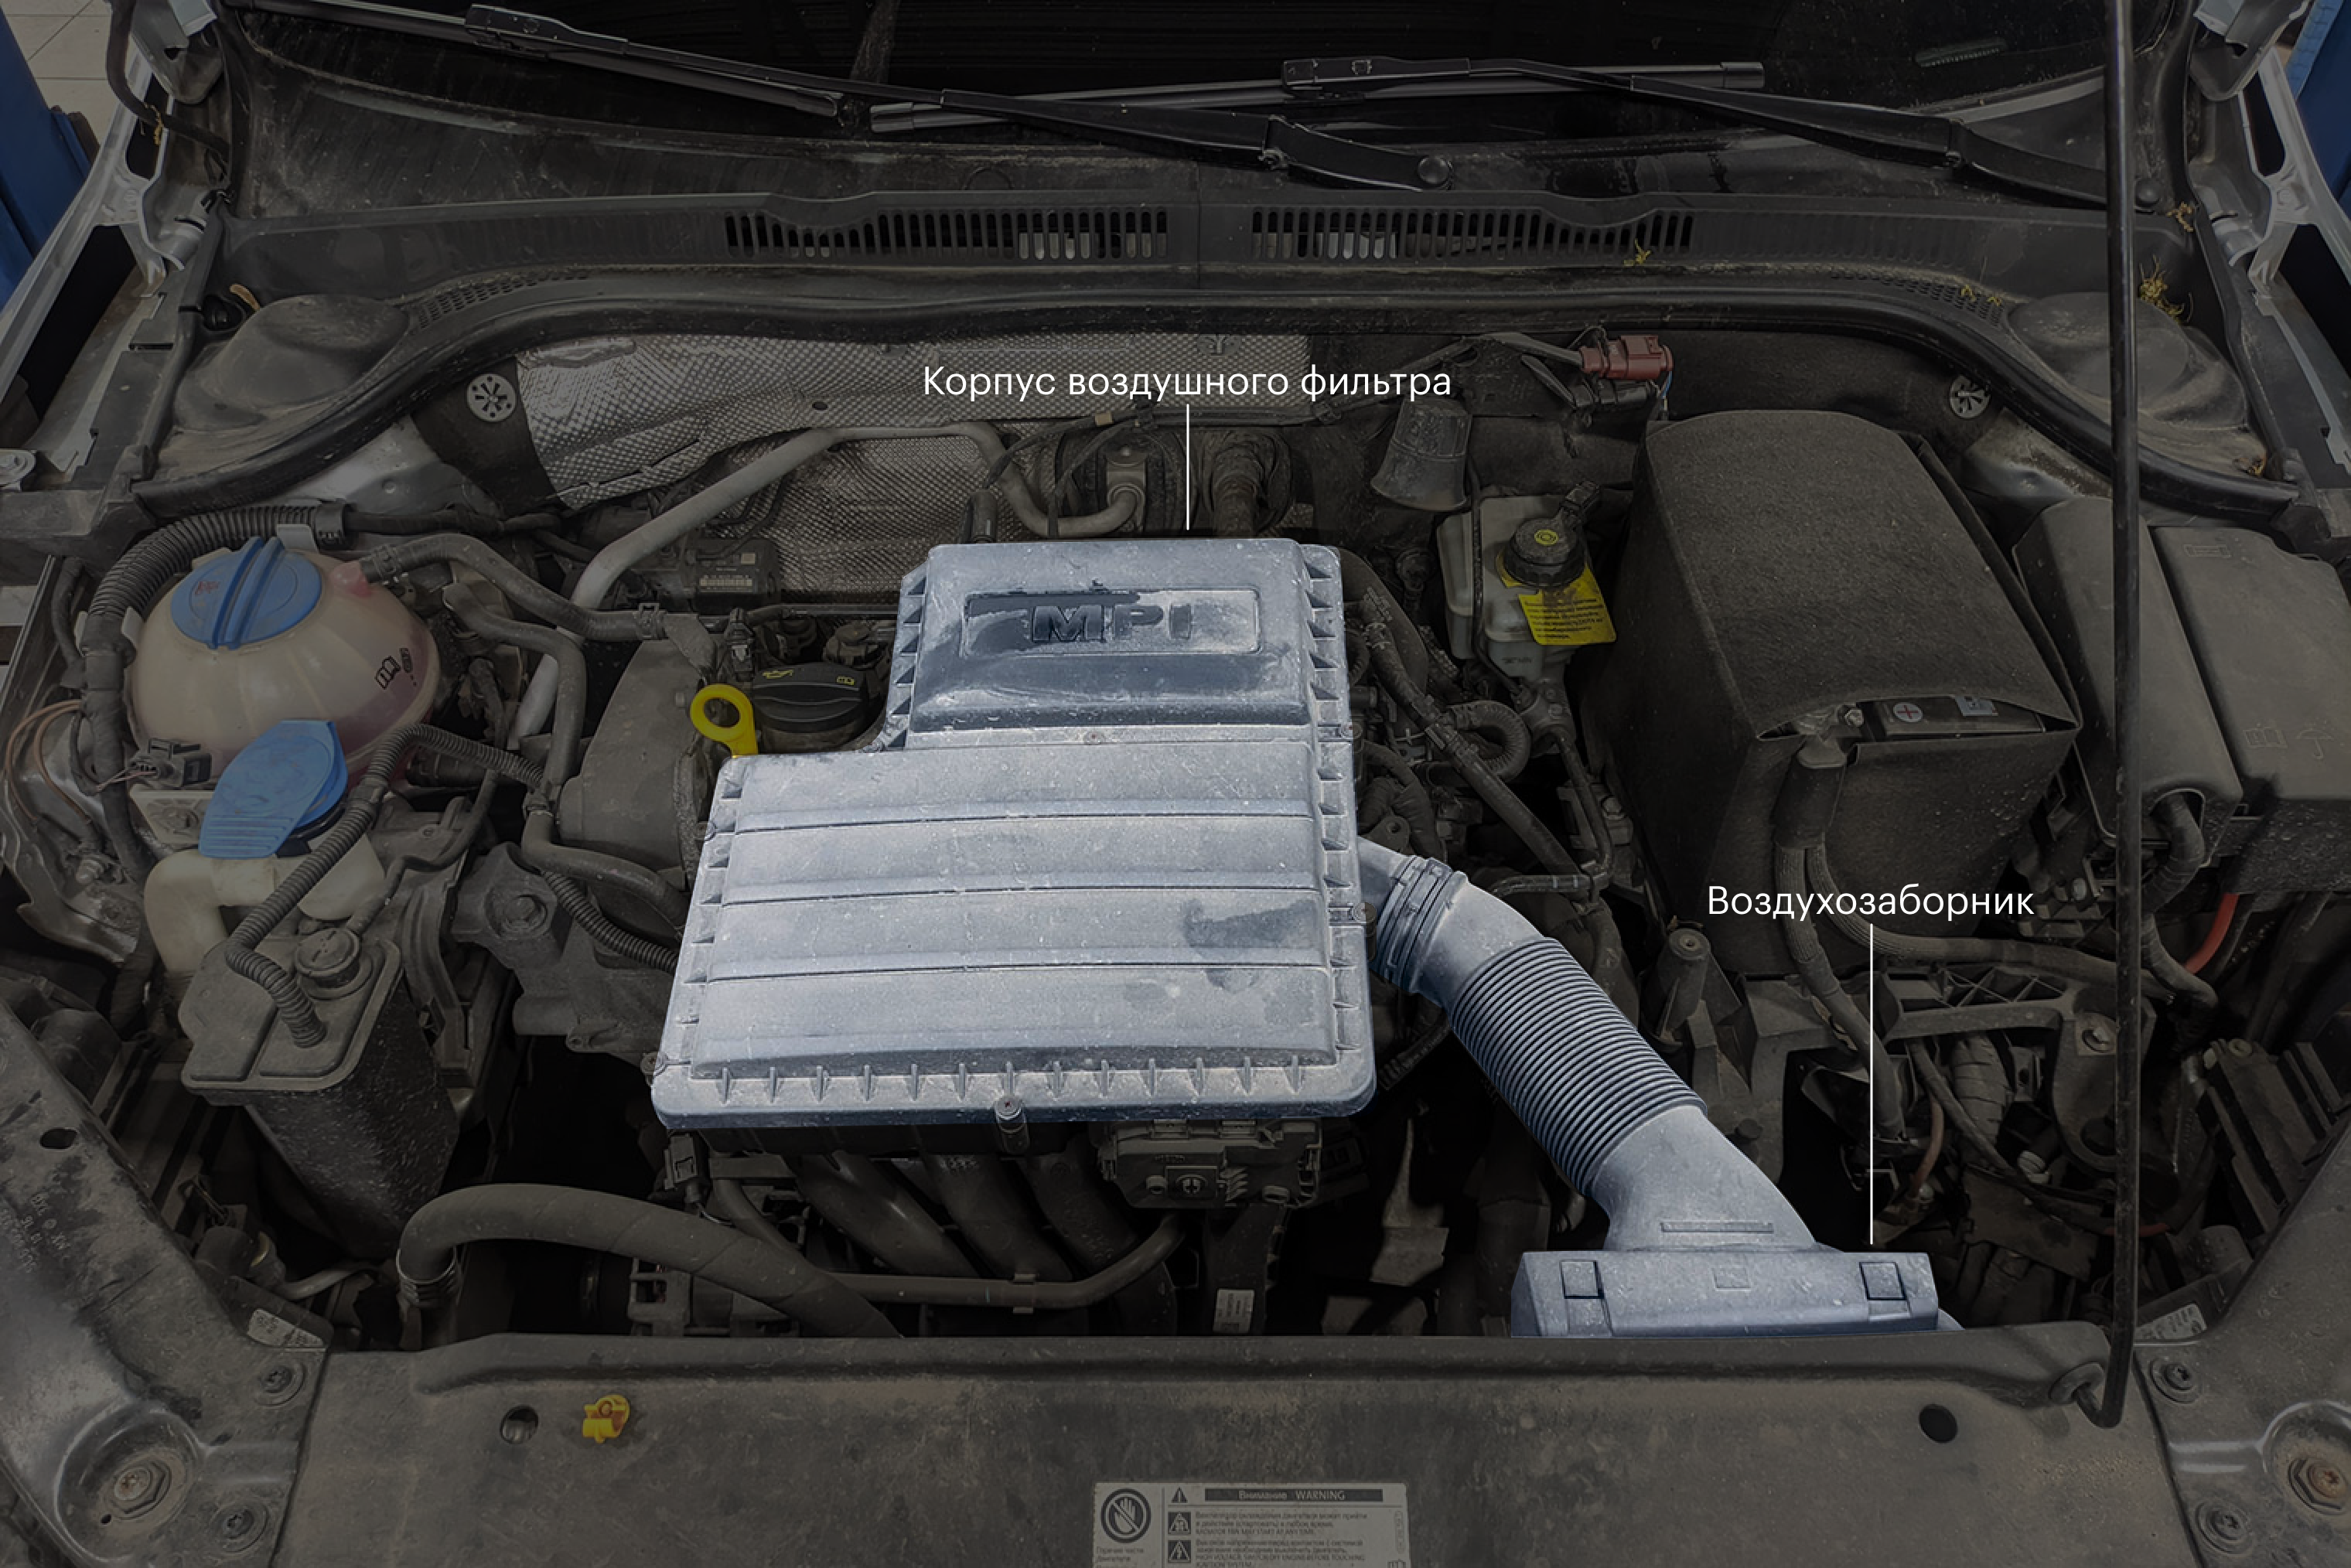 Volkswagen Jetta 2016 года с таким же 1.6 MPI, но воздухозаборник разместили в решетке радиатора